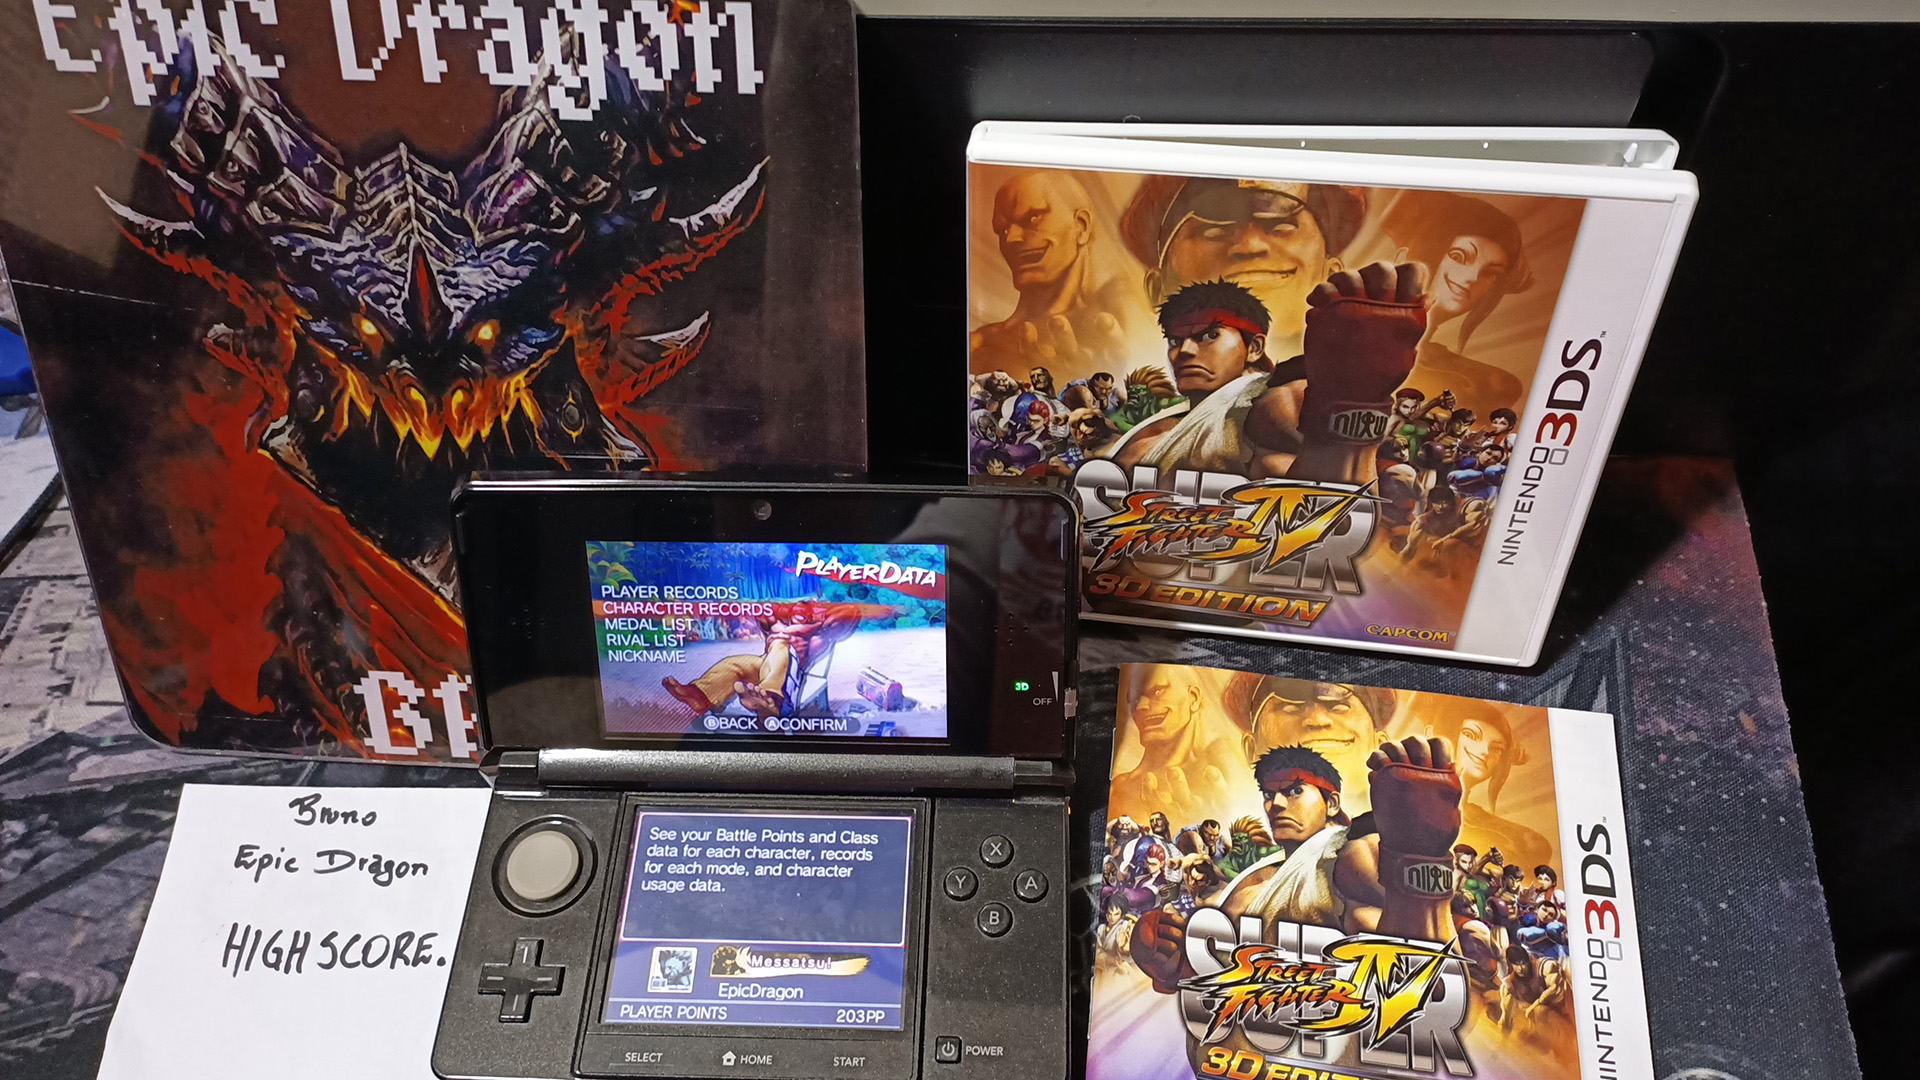 EpicDragon: Super Street Fighter IV 3D Edition: Arcade: T. Hawk (Nintendo 3DS) 314,600 points on 2022-08-28 12:10:09